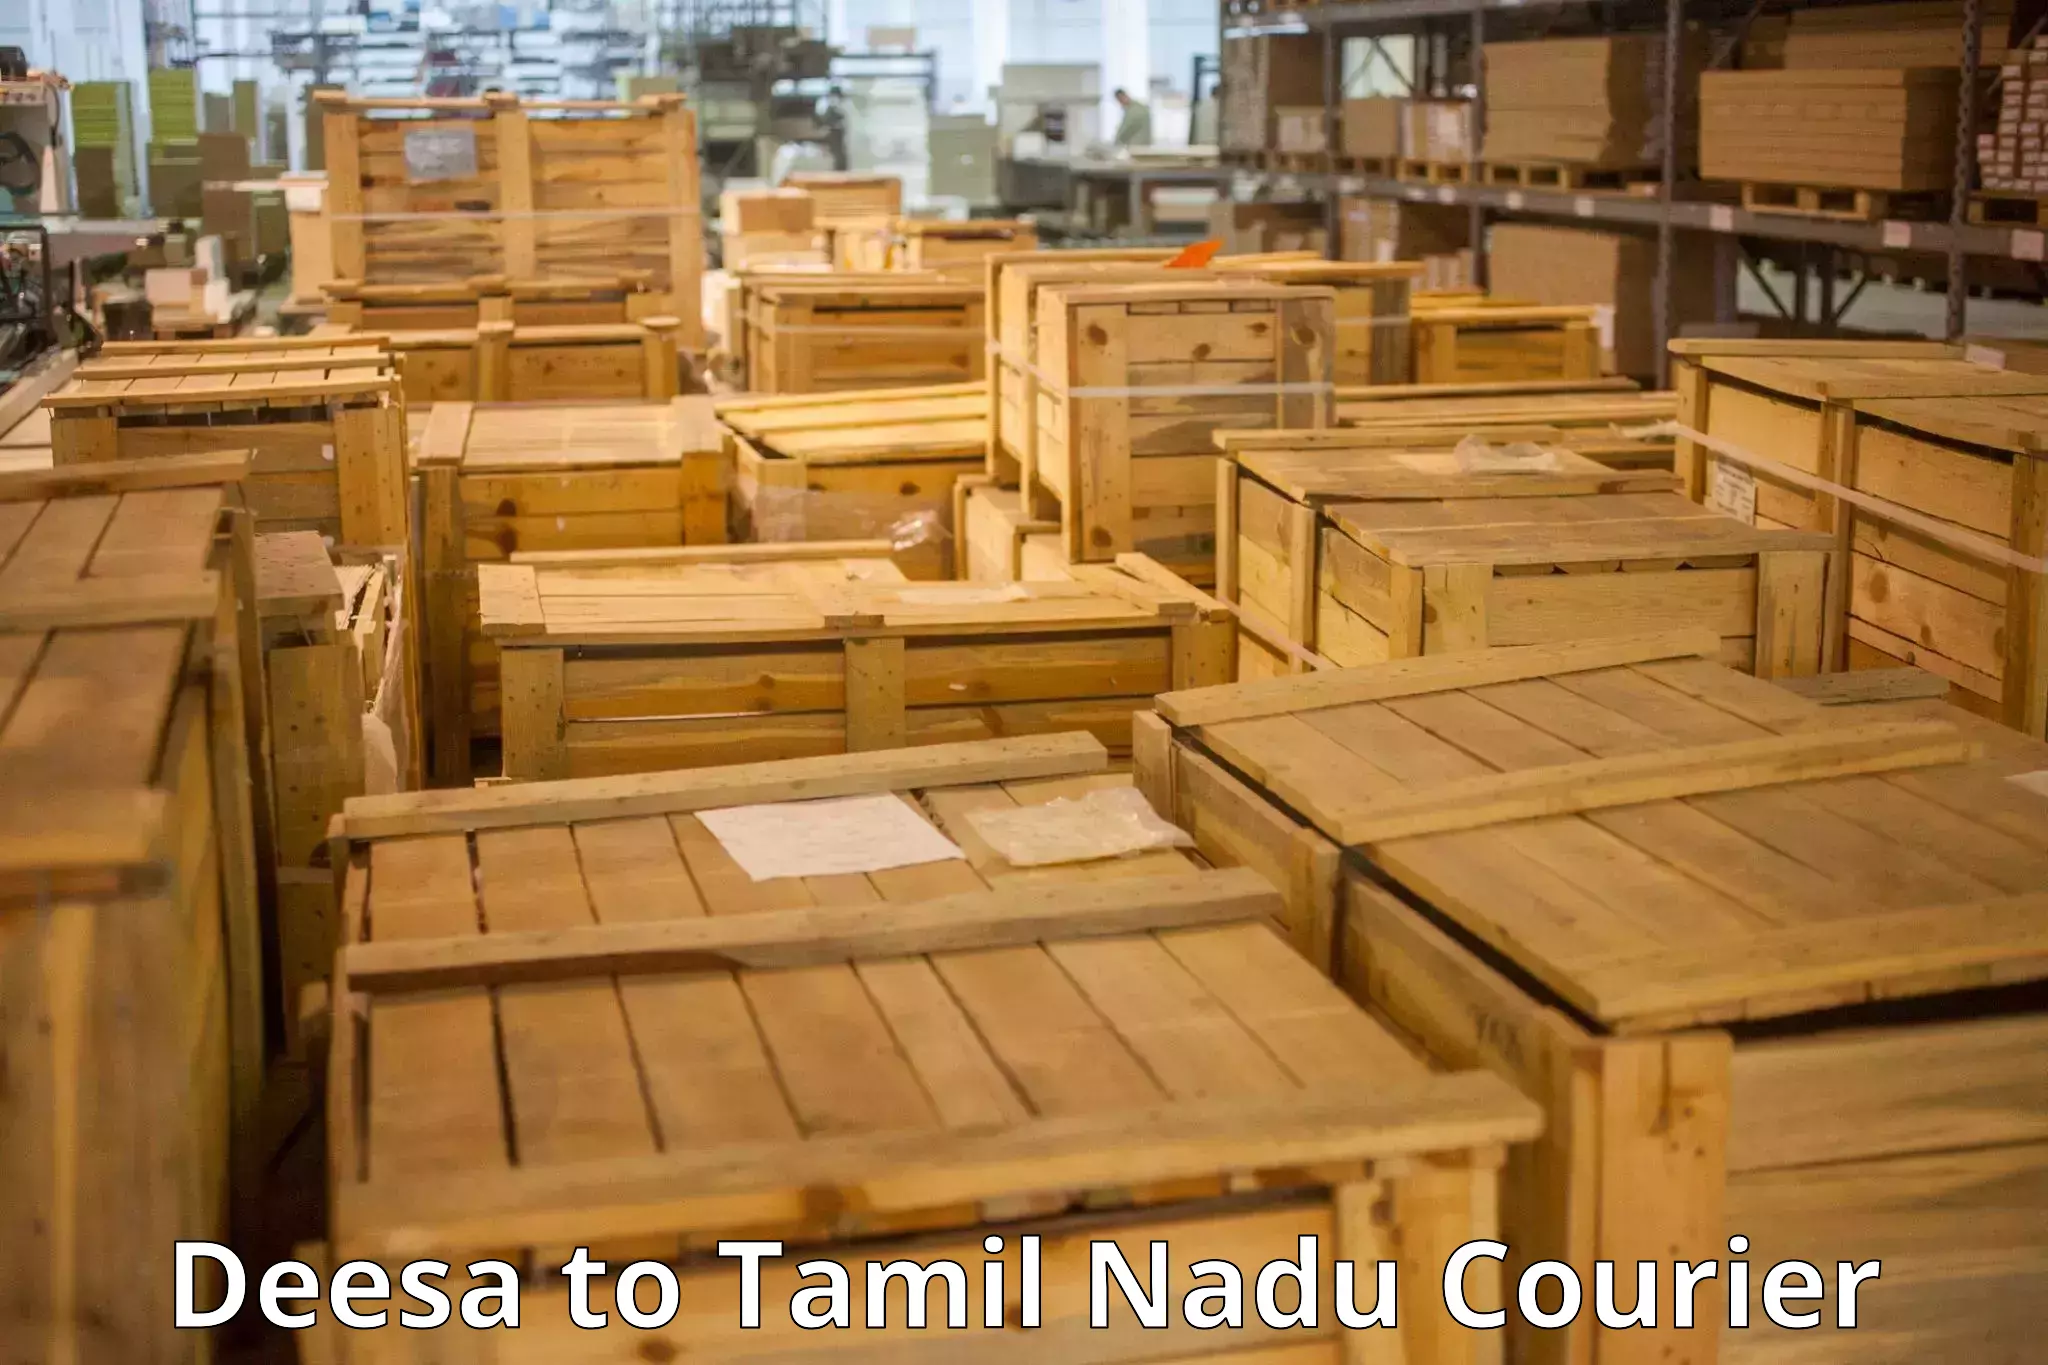 Luggage shipment specialists Deesa to Tamil Nadu